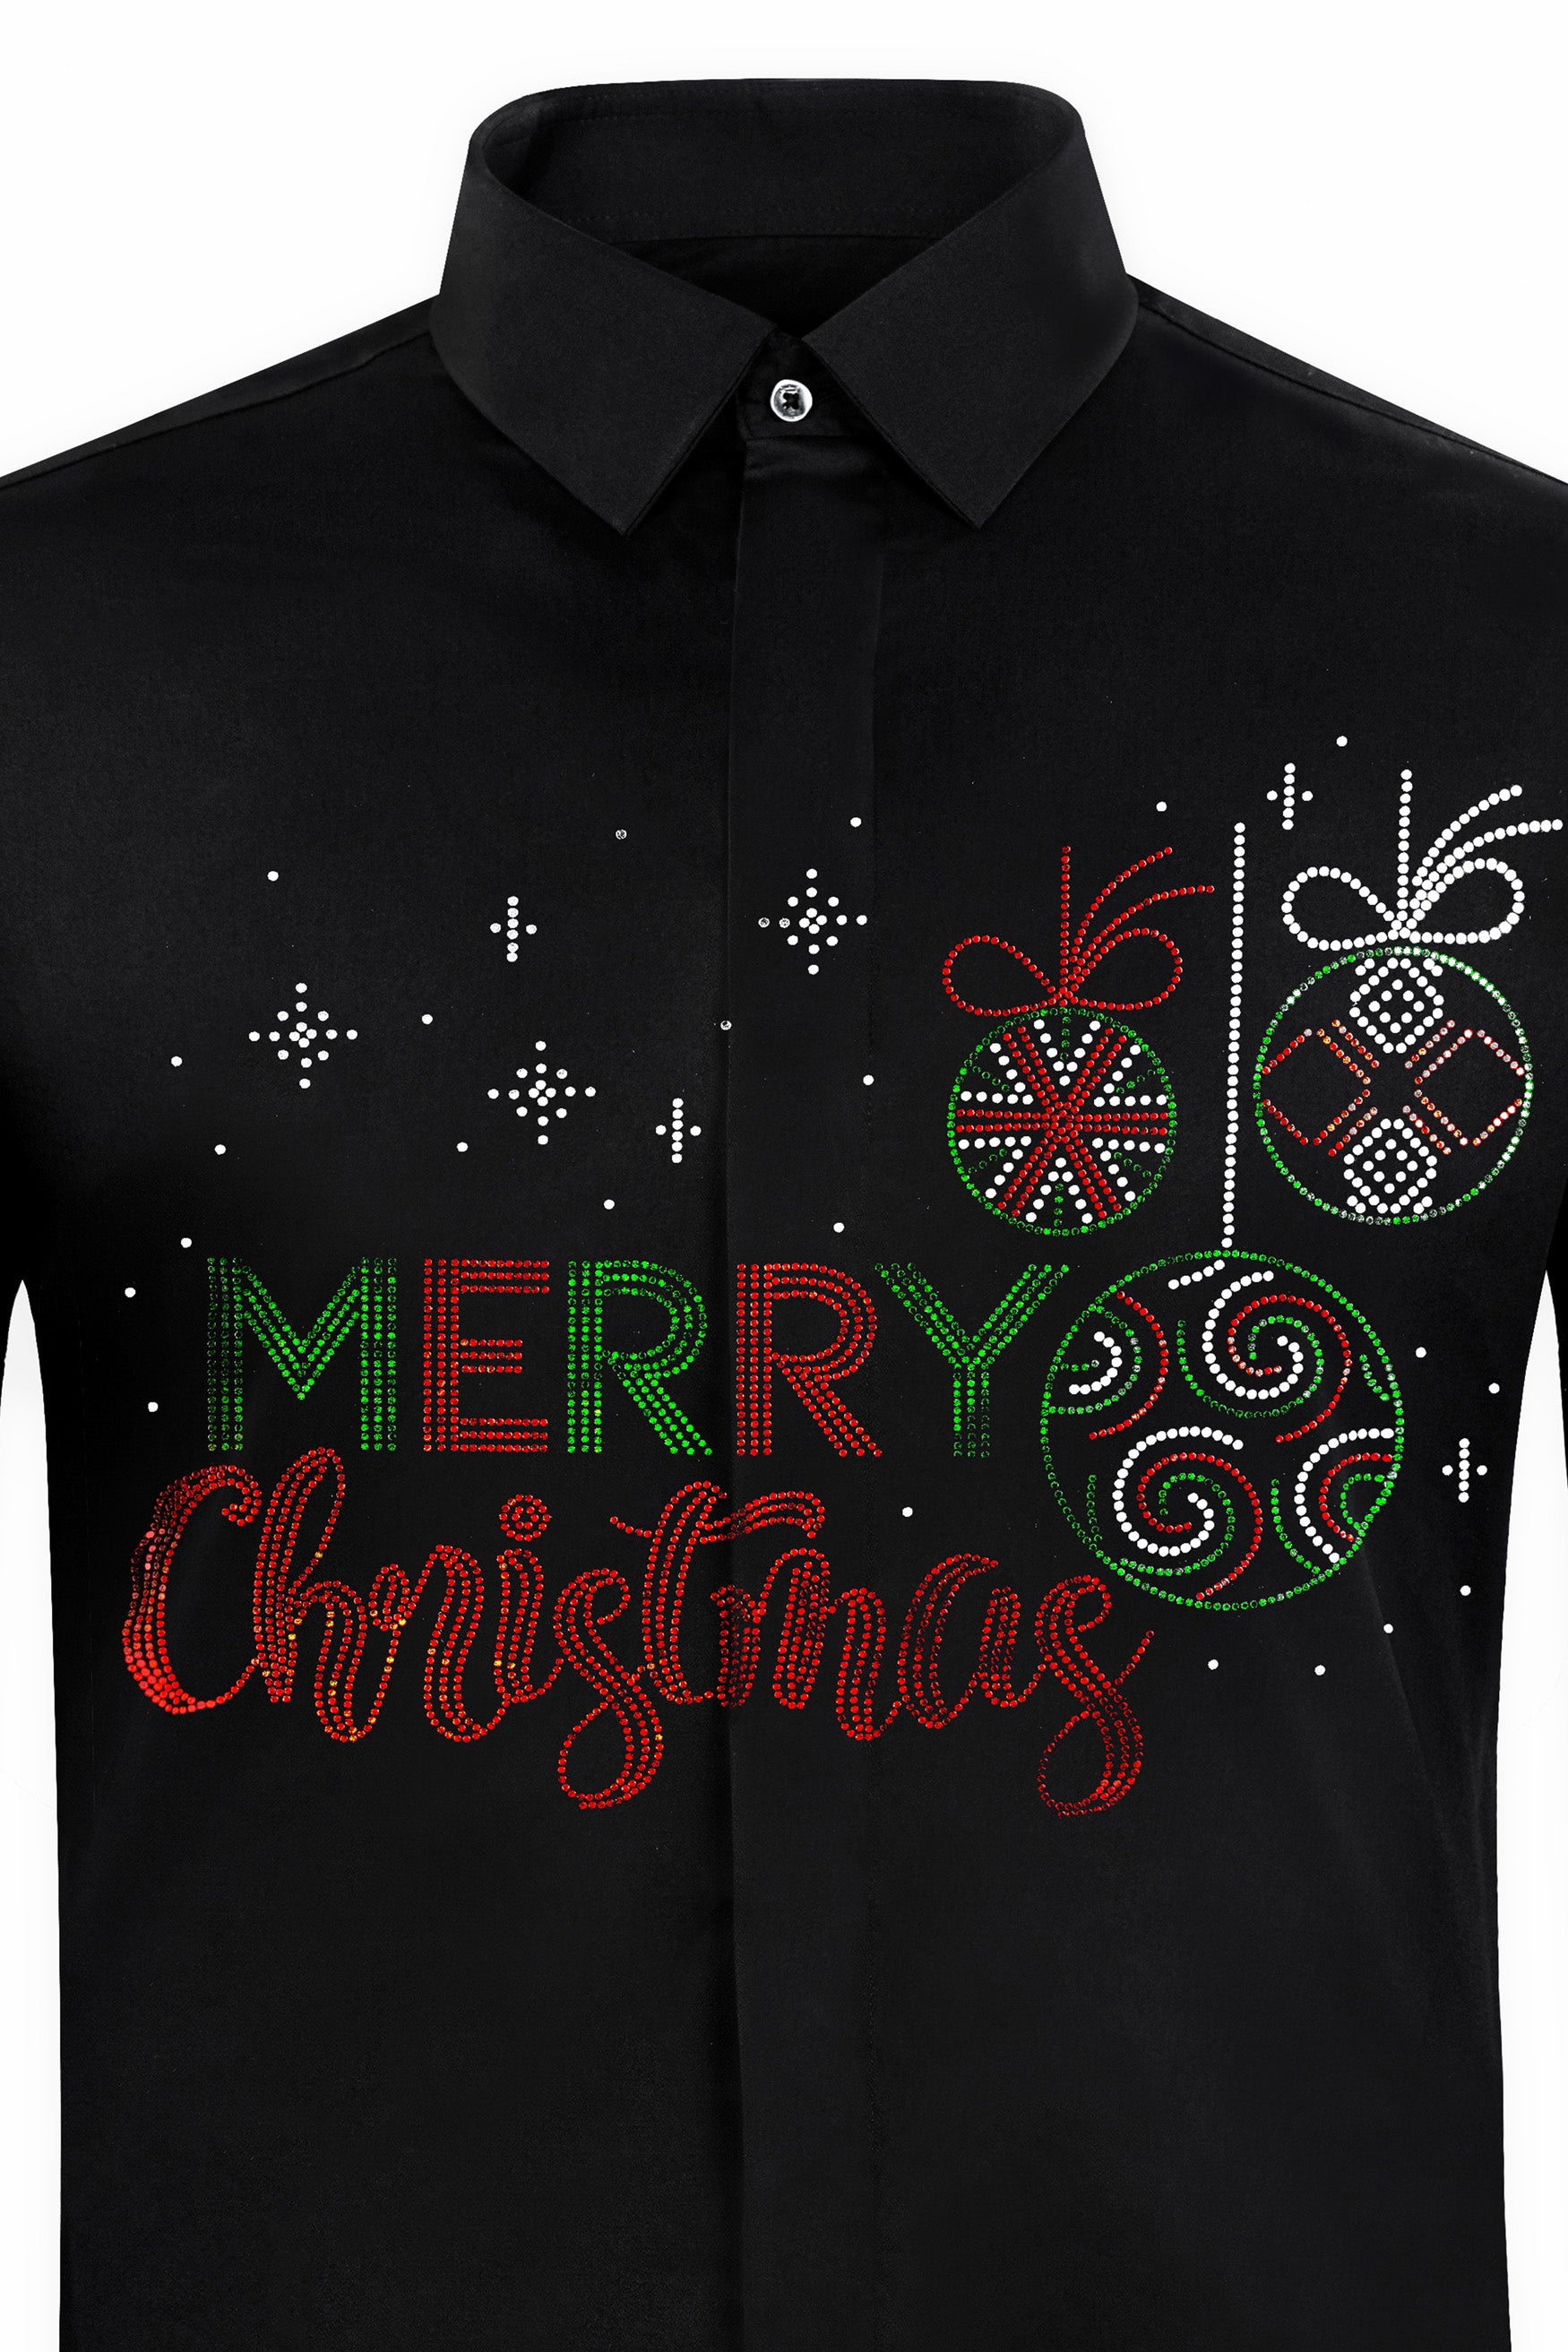 Jade Black Merry Christmas Hotfix Subtle Sheen Super Soft Premium Cotton Designer Shirt 12261-BLK-P782-38, 12261-BLK-P782-H-38, 12261-BLK-P782-39, 12261-BLK-P782-H-39, 12261-BLK-P782-40, 12261-BLK-P782-H-40, 12261-BLK-P782-42, 12261-BLK-P782-H-42, 12261-BLK-P782-44, 12261-BLK-P782-H-44, 12261-BLK-P782-46, 12261-BLK-P782-H-46, 12261-BLK-P782-48, 12261-BLK-P782-H-48, 12261-BLK-P782-50, 12261-BLK-P782-H-50, 12261-BLK-P782-52, 12261-BLK-P782-H-52